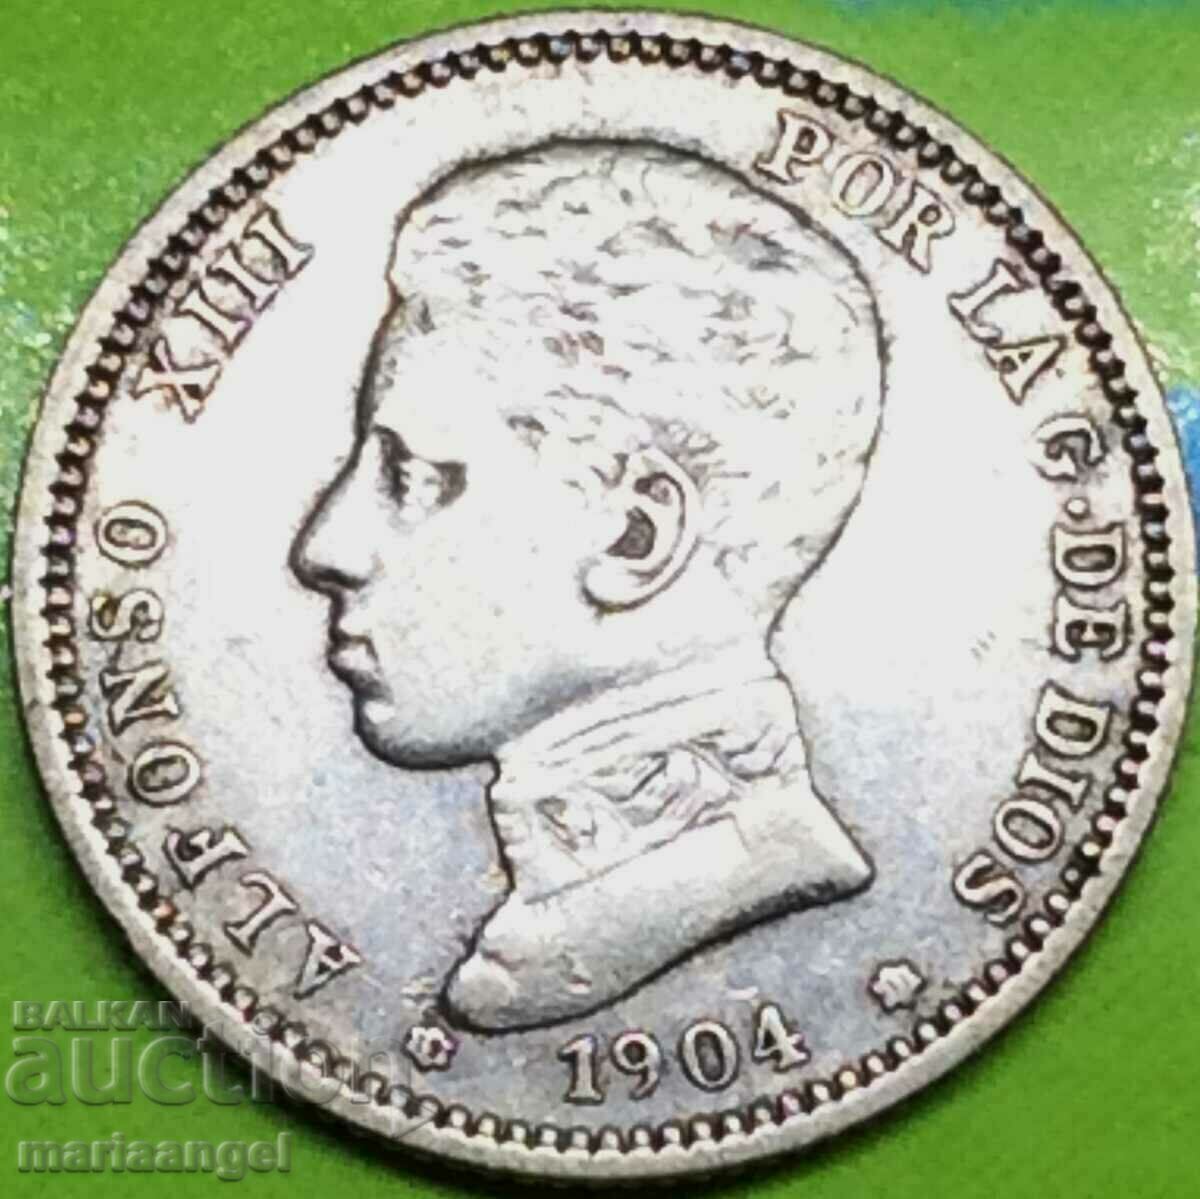 Spain 1 peseta 1904 Alfonso VIII silver